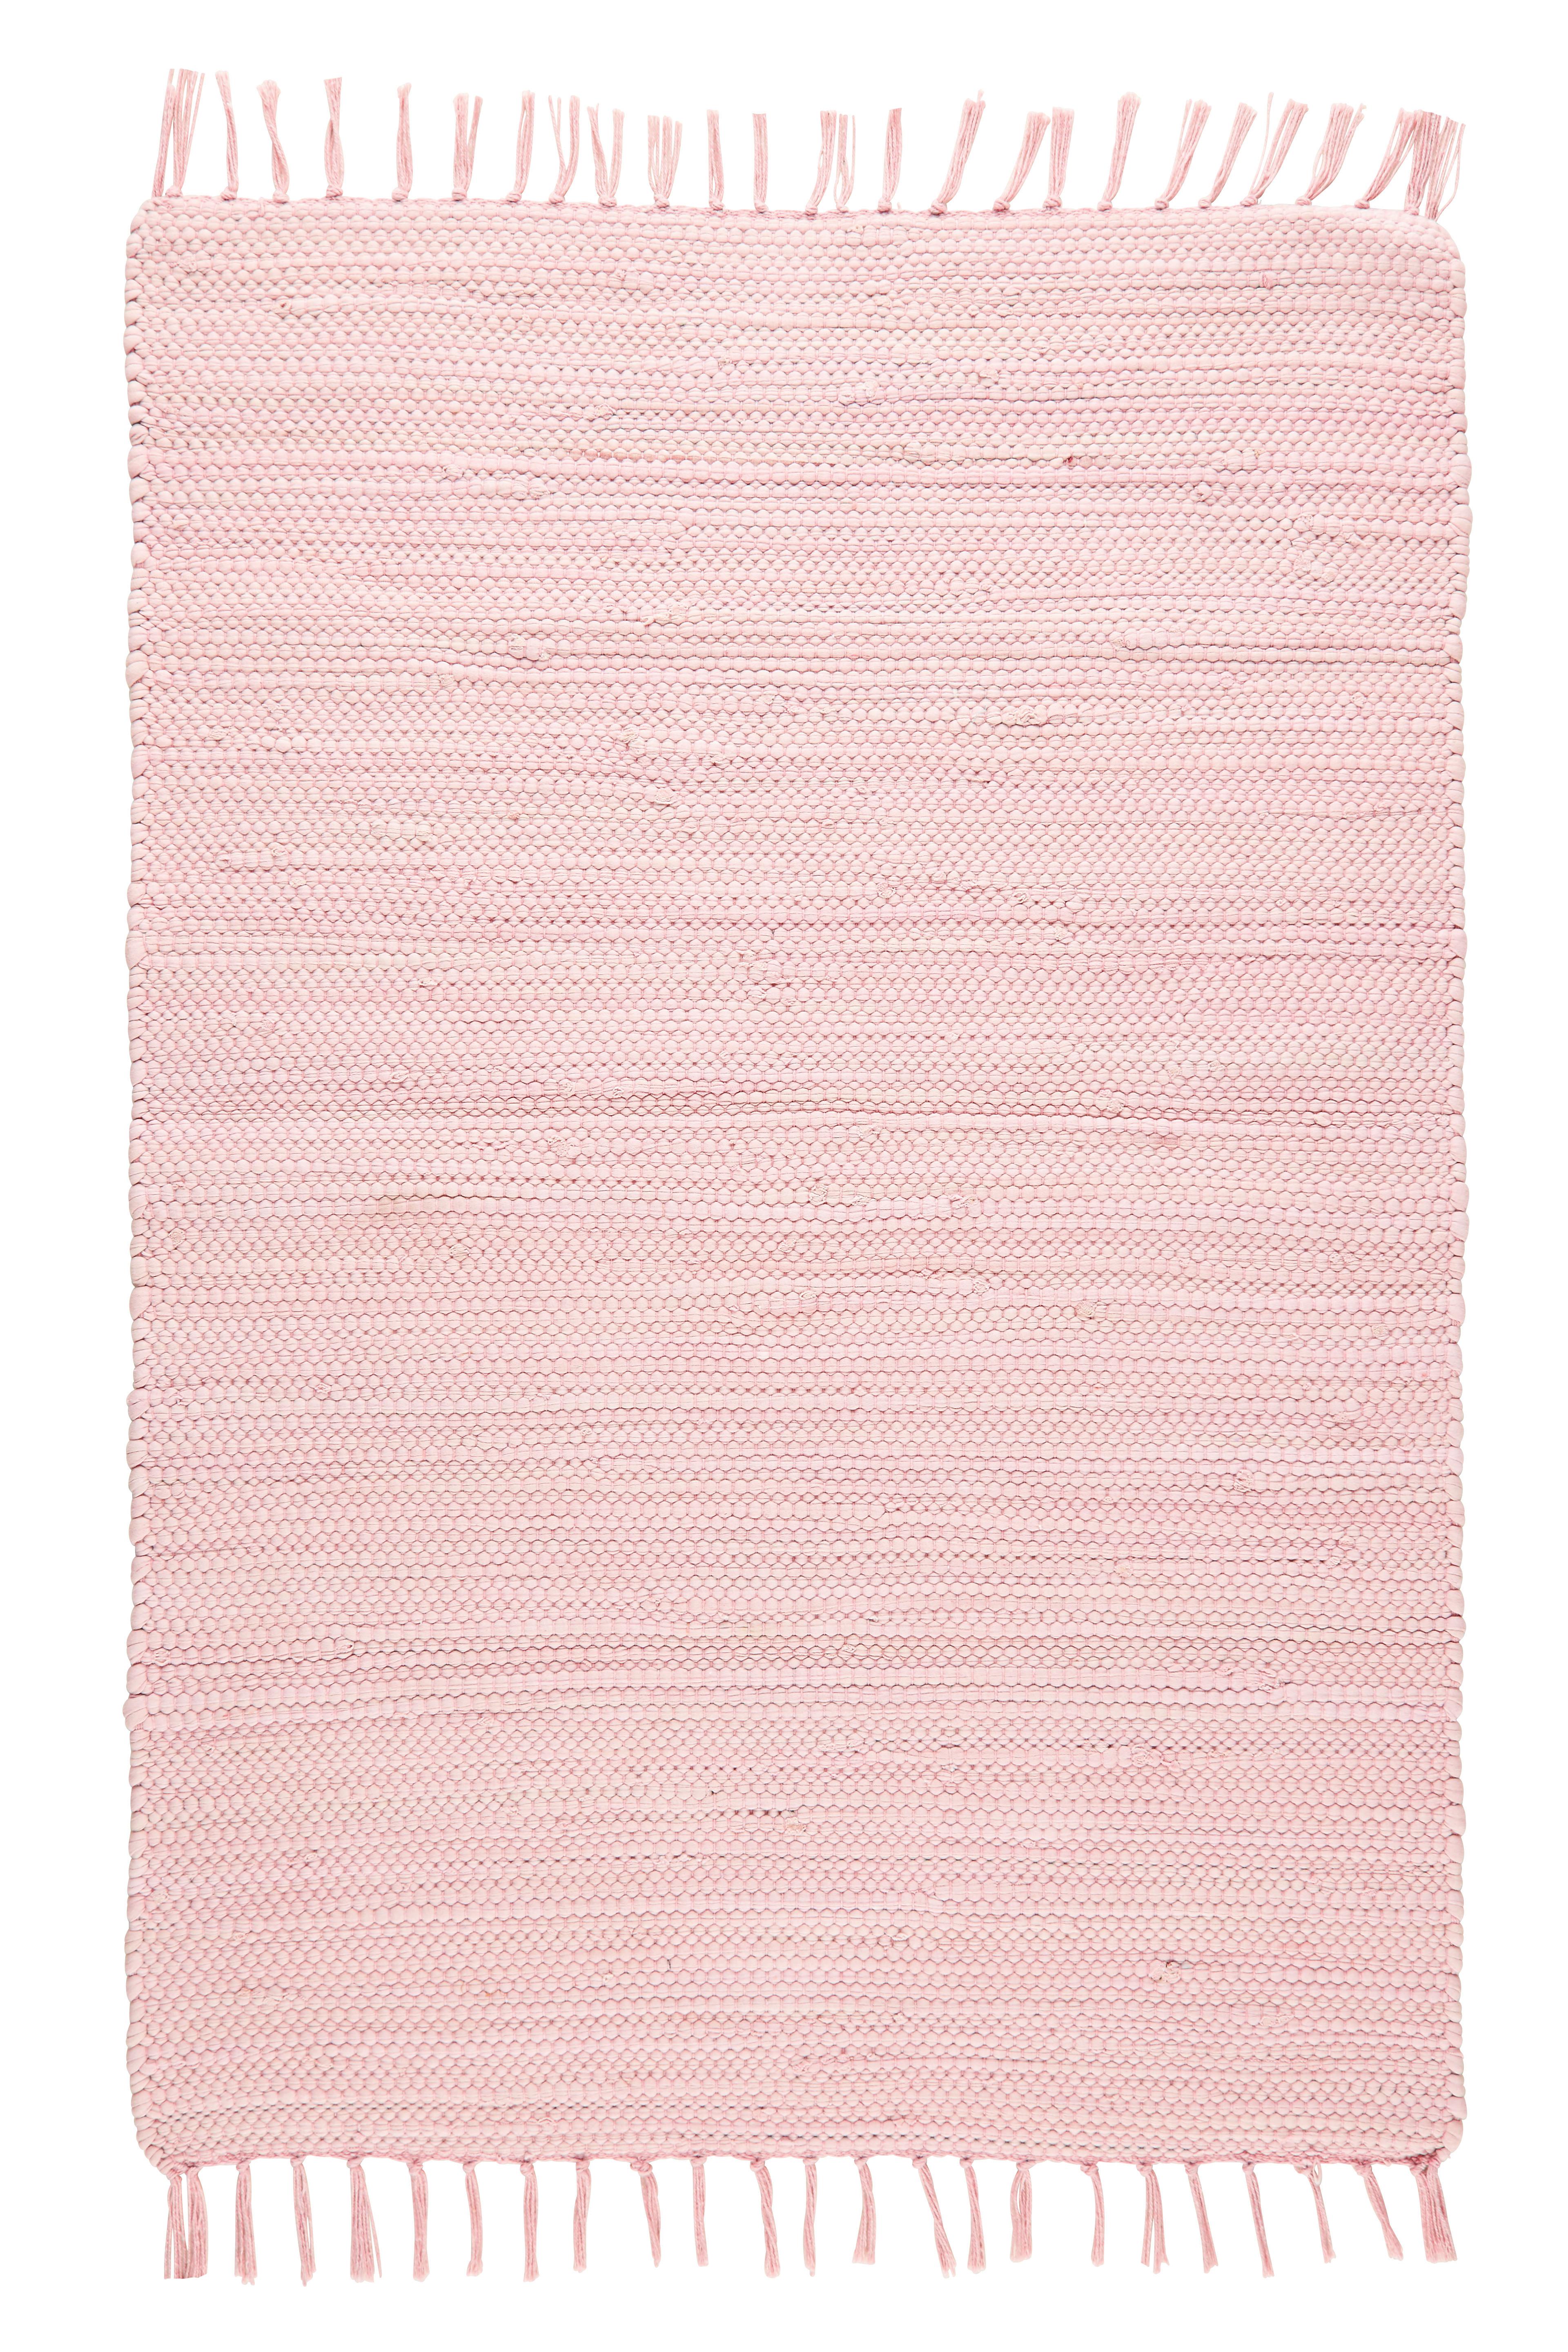 Preproga Iz Krp Julia 3 - roza, Romantika, tekstil (70/230cm) - Modern Living